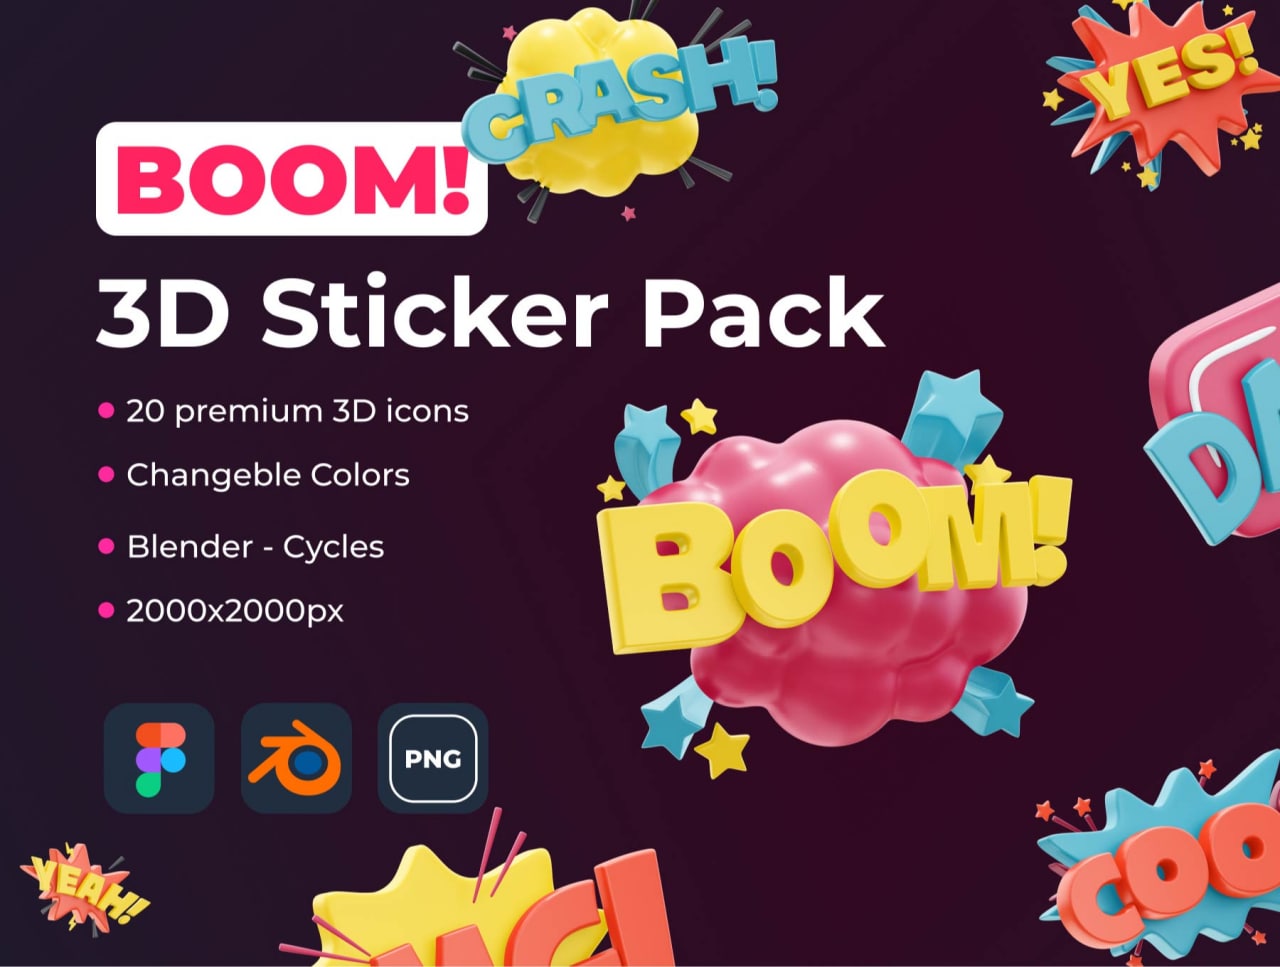 BOOM! 3D Sticker Pack FREE